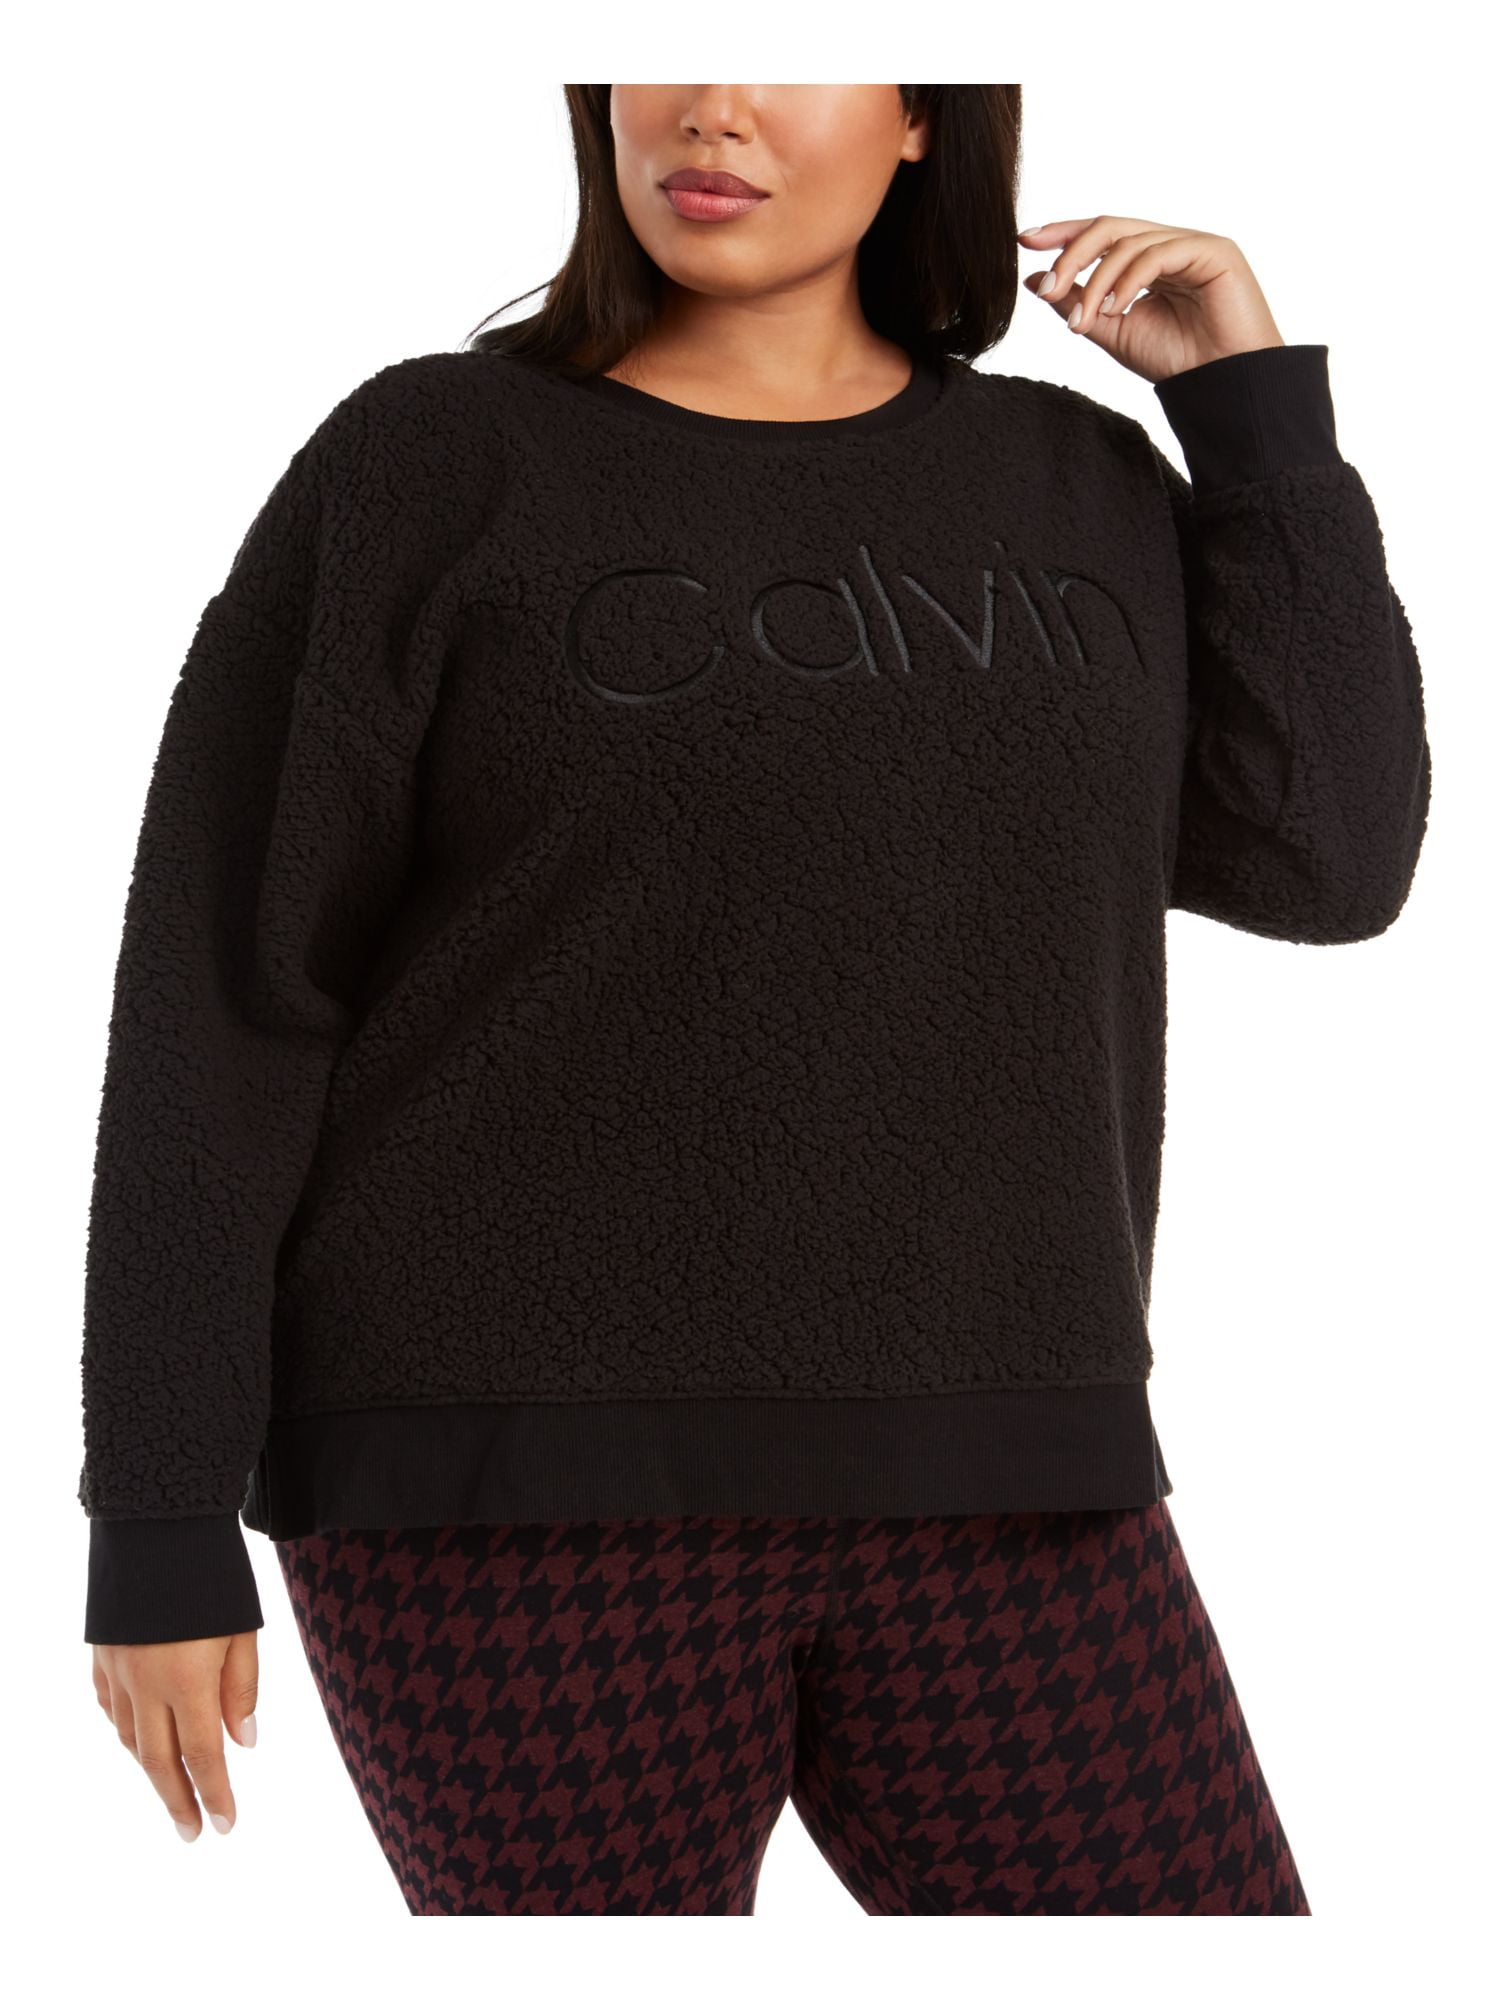 Calvin Klein Performance Womens Plus Embroidered Fitness Sweatshirt Black 1X